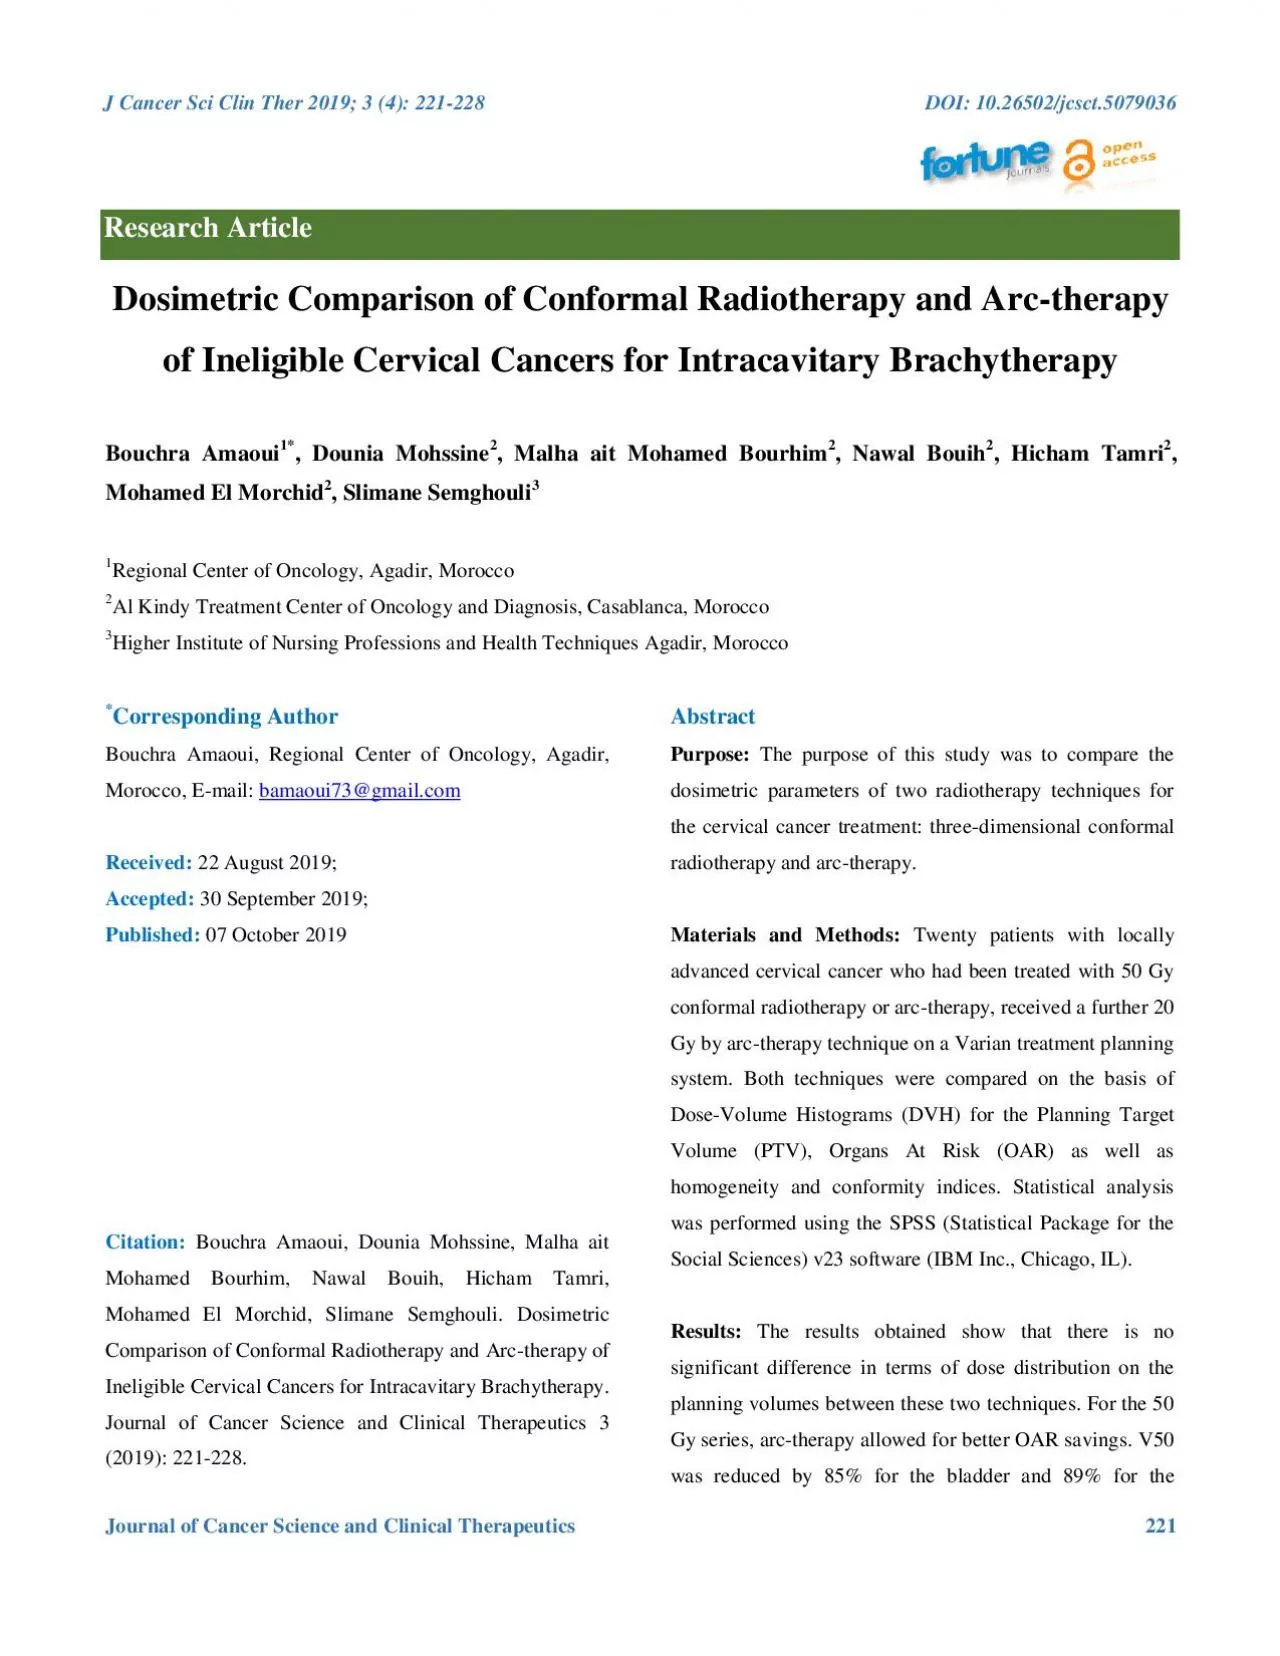 Dosimetric Comparison of Conformal Radiotherapy and Arc